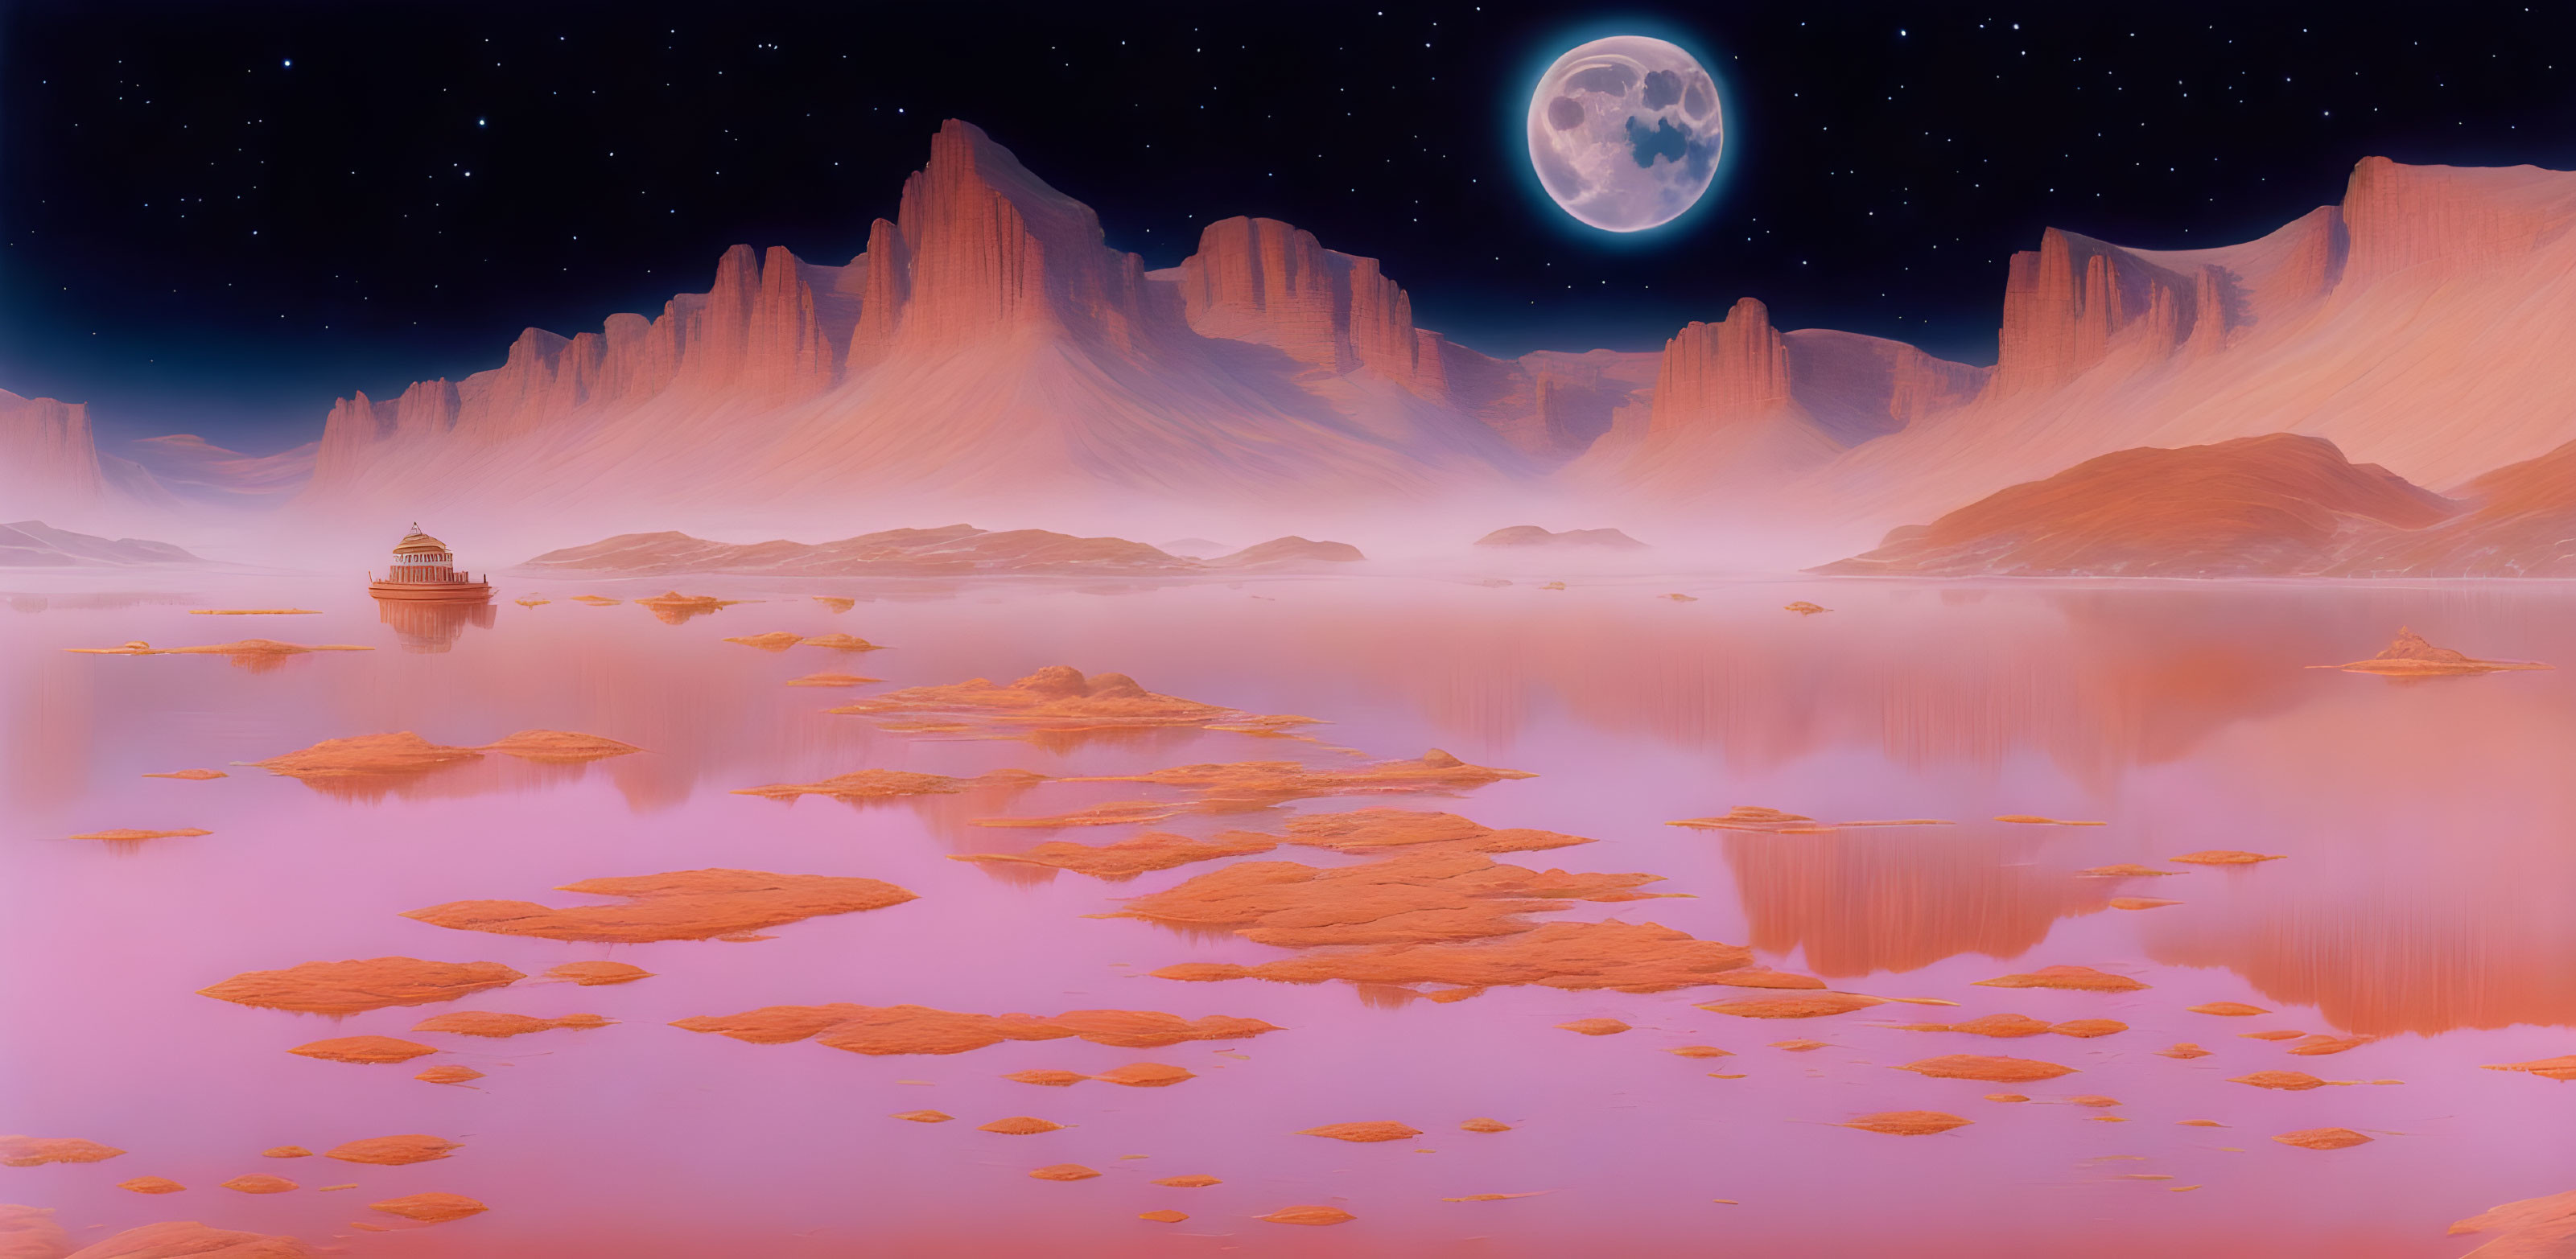 Moonlit Mystique: A Surreal Alien Scene